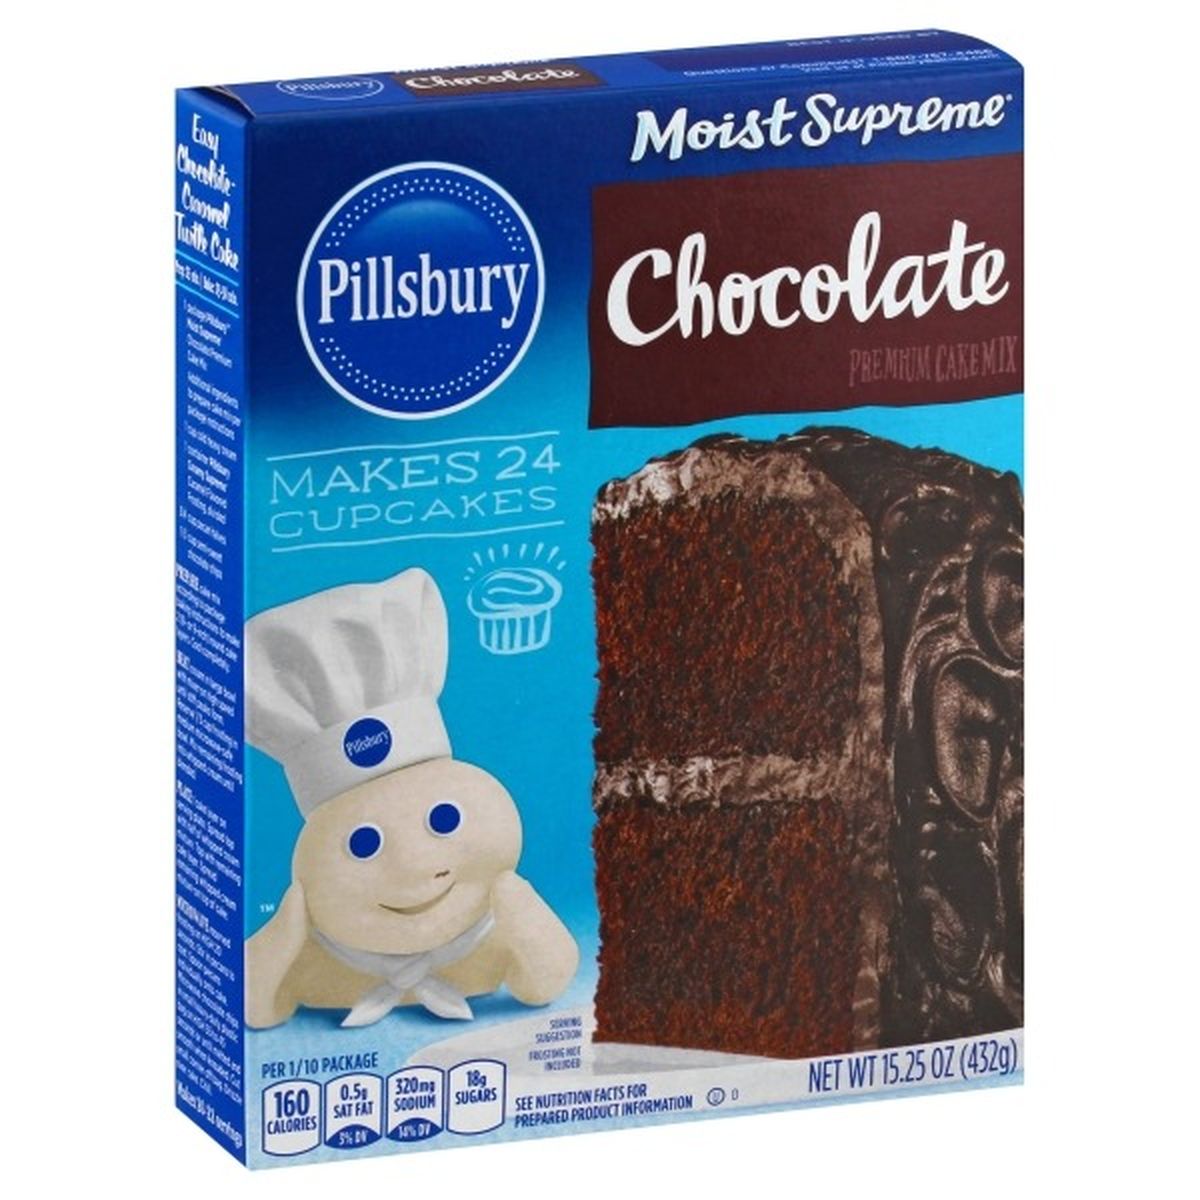 Calories in Pillsbury Moist Supreme Cake Mix, Chocolate